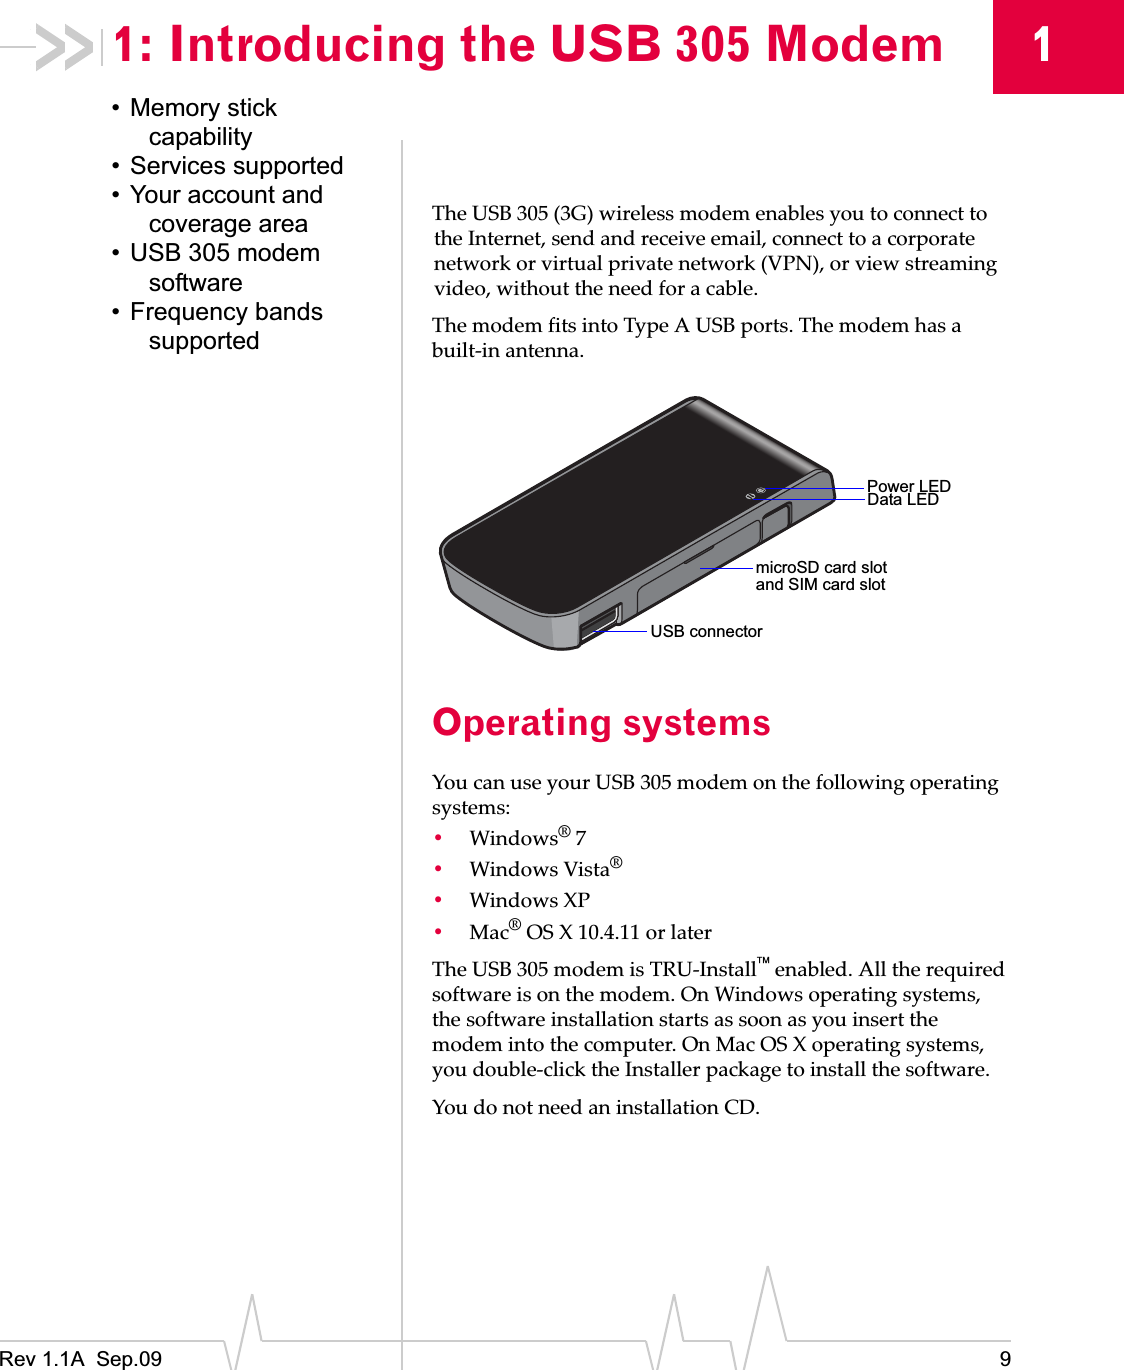 Rev 1.1A  Sep.09 911: Introducing the USB 305 Modem• Memory stick capability• Services supported• Your account and coverage area• USB 305 modem software• Frequency bands supportedTheȱUSBȱ305ȱ(3G)ȱwirelessȱmodemȱenablesȱyouȱtoȱconnectȱtoȱtheȱInternet,ȱsendȱandȱreceiveȱemail,ȱconnectȱtoȱaȱcorporateȱnetworkȱorȱvirtualȱprivateȱnetworkȱ(VPN),ȱorȱviewȱstreamingȱvideo,ȱwithoutȱtheȱneedȱforȱaȱcable.TheȱmodemȱfitsȱintoȱTypeȱAȱUSBȱports.ȱTheȱmodemȱhasȱaȱbuiltȬinȱantenna.Operating systemsYouȱcanȱuseȱyourȱUSBȱ305ȱmodemȱonȱtheȱfollowingȱoperatingȱsystems:•Windows®ȱ7•WindowsȱVista®•WindowsȱXP•Mac®ȱOSȱXȱ10.4.11ȱorȱlaterTheȱUSBȱ305ȱmodemȱisȱTRUȬInstall¥ȱenabled.ȱAllȱtheȱrequiredȱsoftwareȱisȱonȱtheȱmodem.ȱOnȱWindowsȱoperatingȱsystems,ȱtheȱsoftwareȱinstallationȱstartsȱasȱsoonȱasȱyouȱinsertȱtheȱmodemȱintoȱtheȱcomputer.ȱOnȱMacȱOSȱXȱoperatingȱsystems,ȱyouȱdoubleȬclickȱtheȱInstallerȱpackageȱtoȱinstallȱtheȱsoftware.YouȱdoȱnotȱneedȱanȱinstallationȱCD.Power LEDData LEDmicroSD card slotUSB connectorand SIM card slot